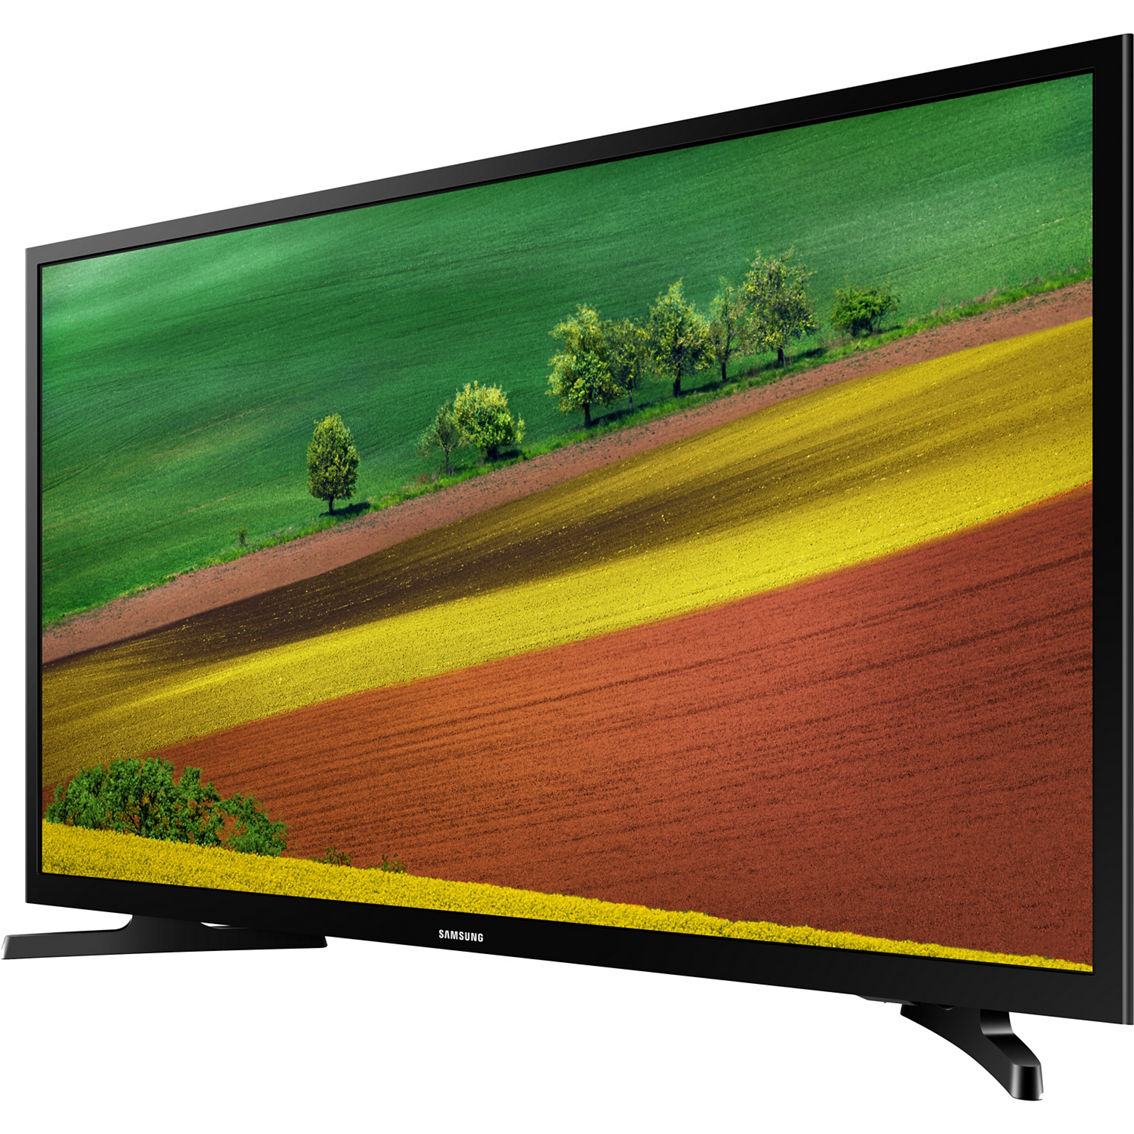 Samsung 32 in. LED 60Hz Smart TV UN32M4500 - Image 2 of 4